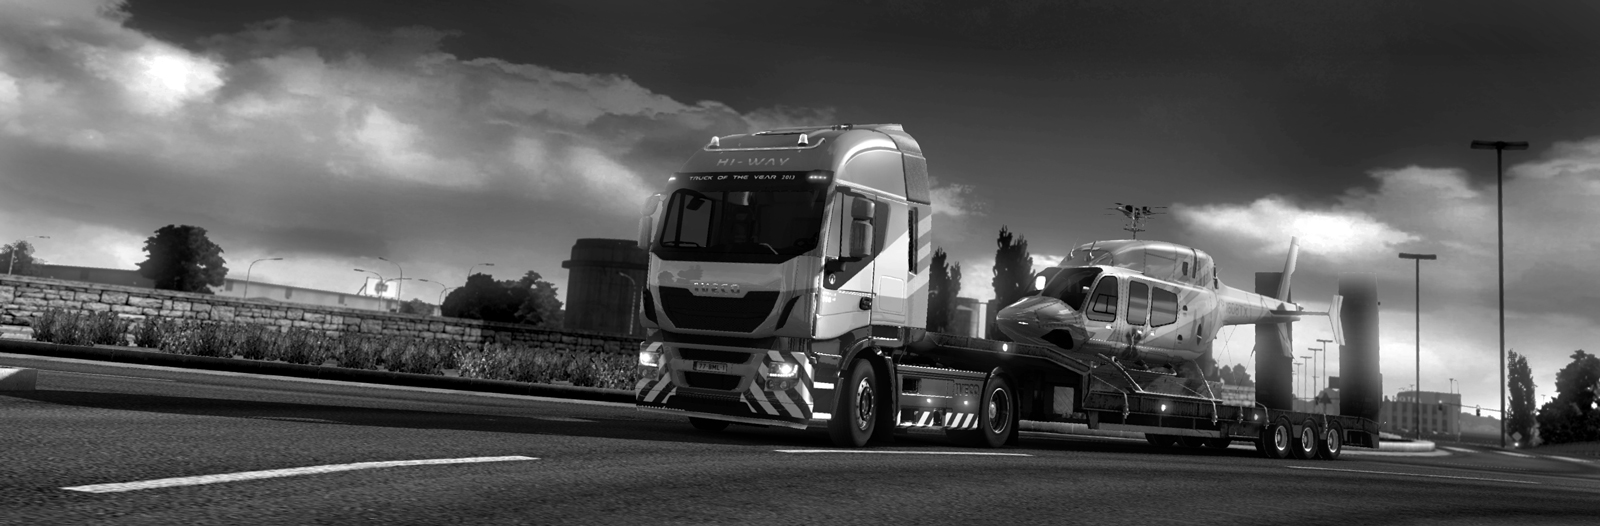 Euro truck simulator 1.3 crack indir gezginler